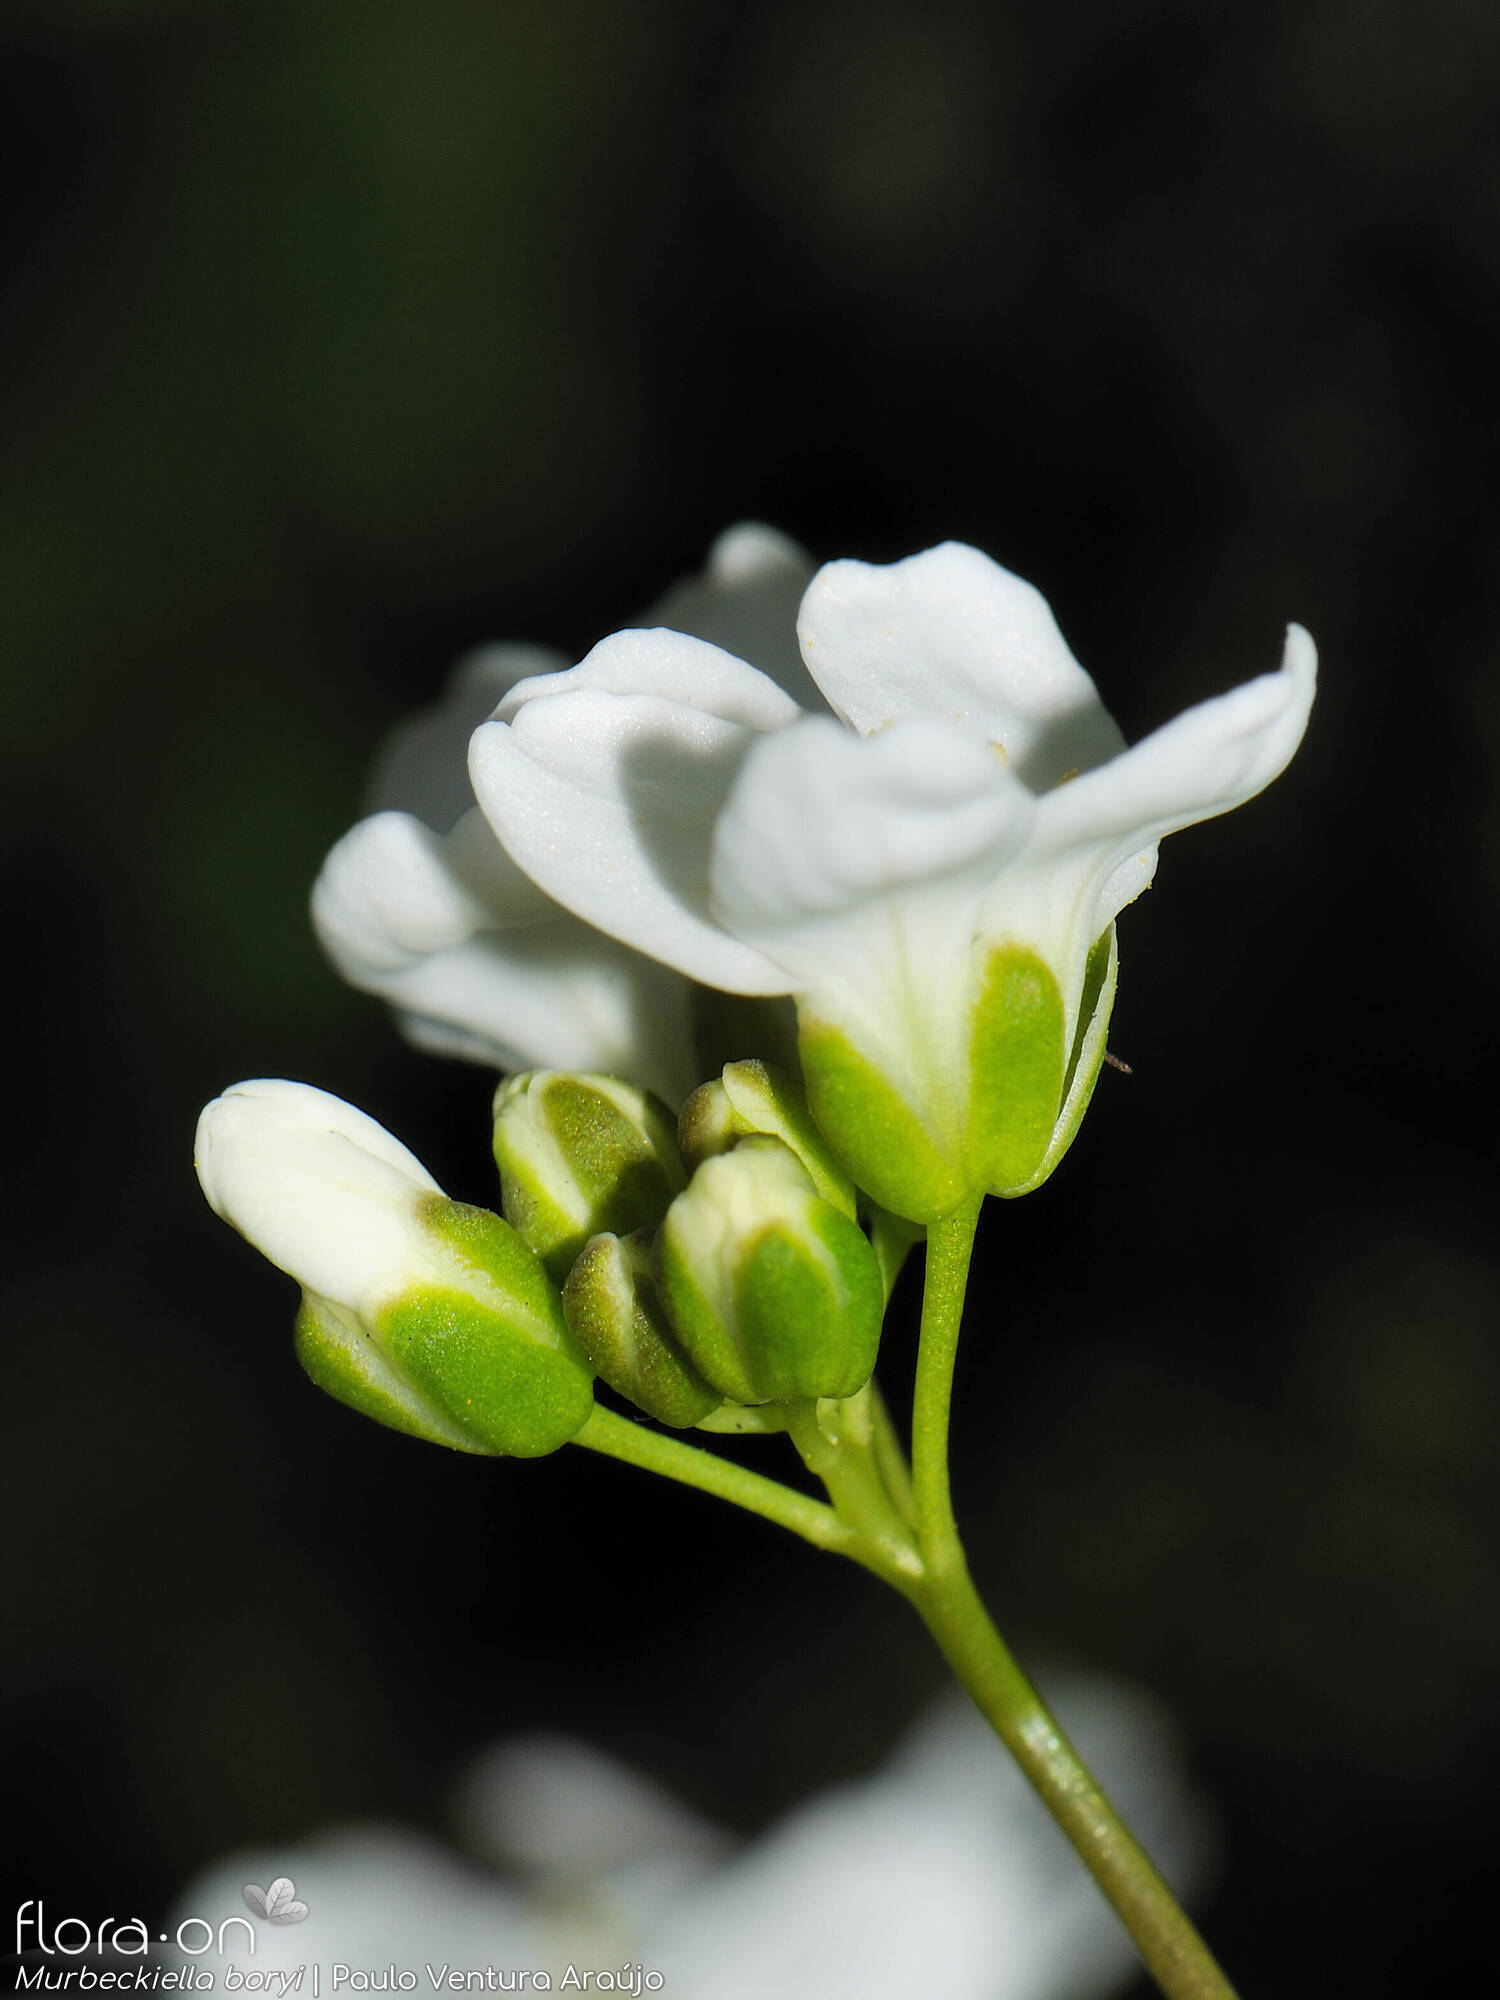 Murbeckiella boryi - Flor (geral) | Paulo Ventura Araújo; CC BY-NC 4.0